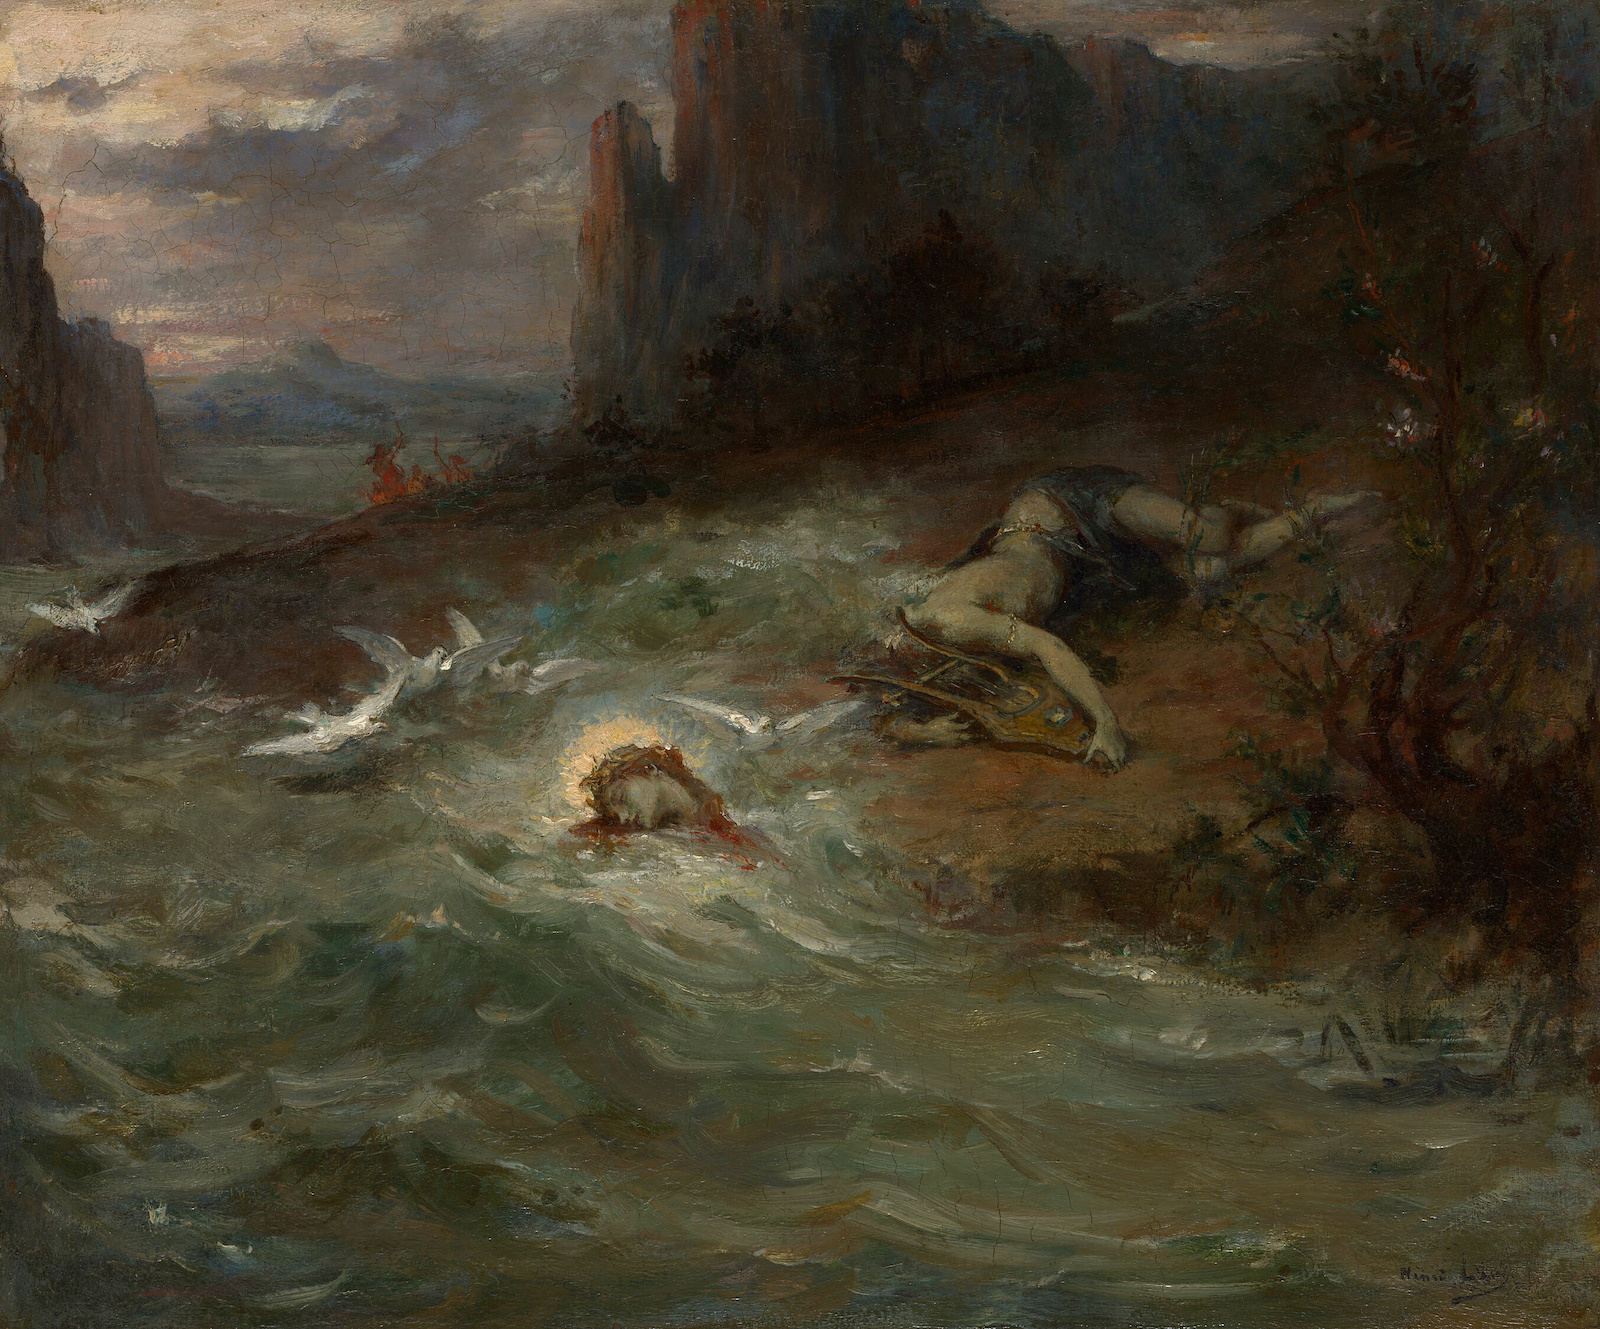 The Death of Orpheus, by Henri Leopold Lévy, c. 1870. Art Institute of Chicago. Public Domain.